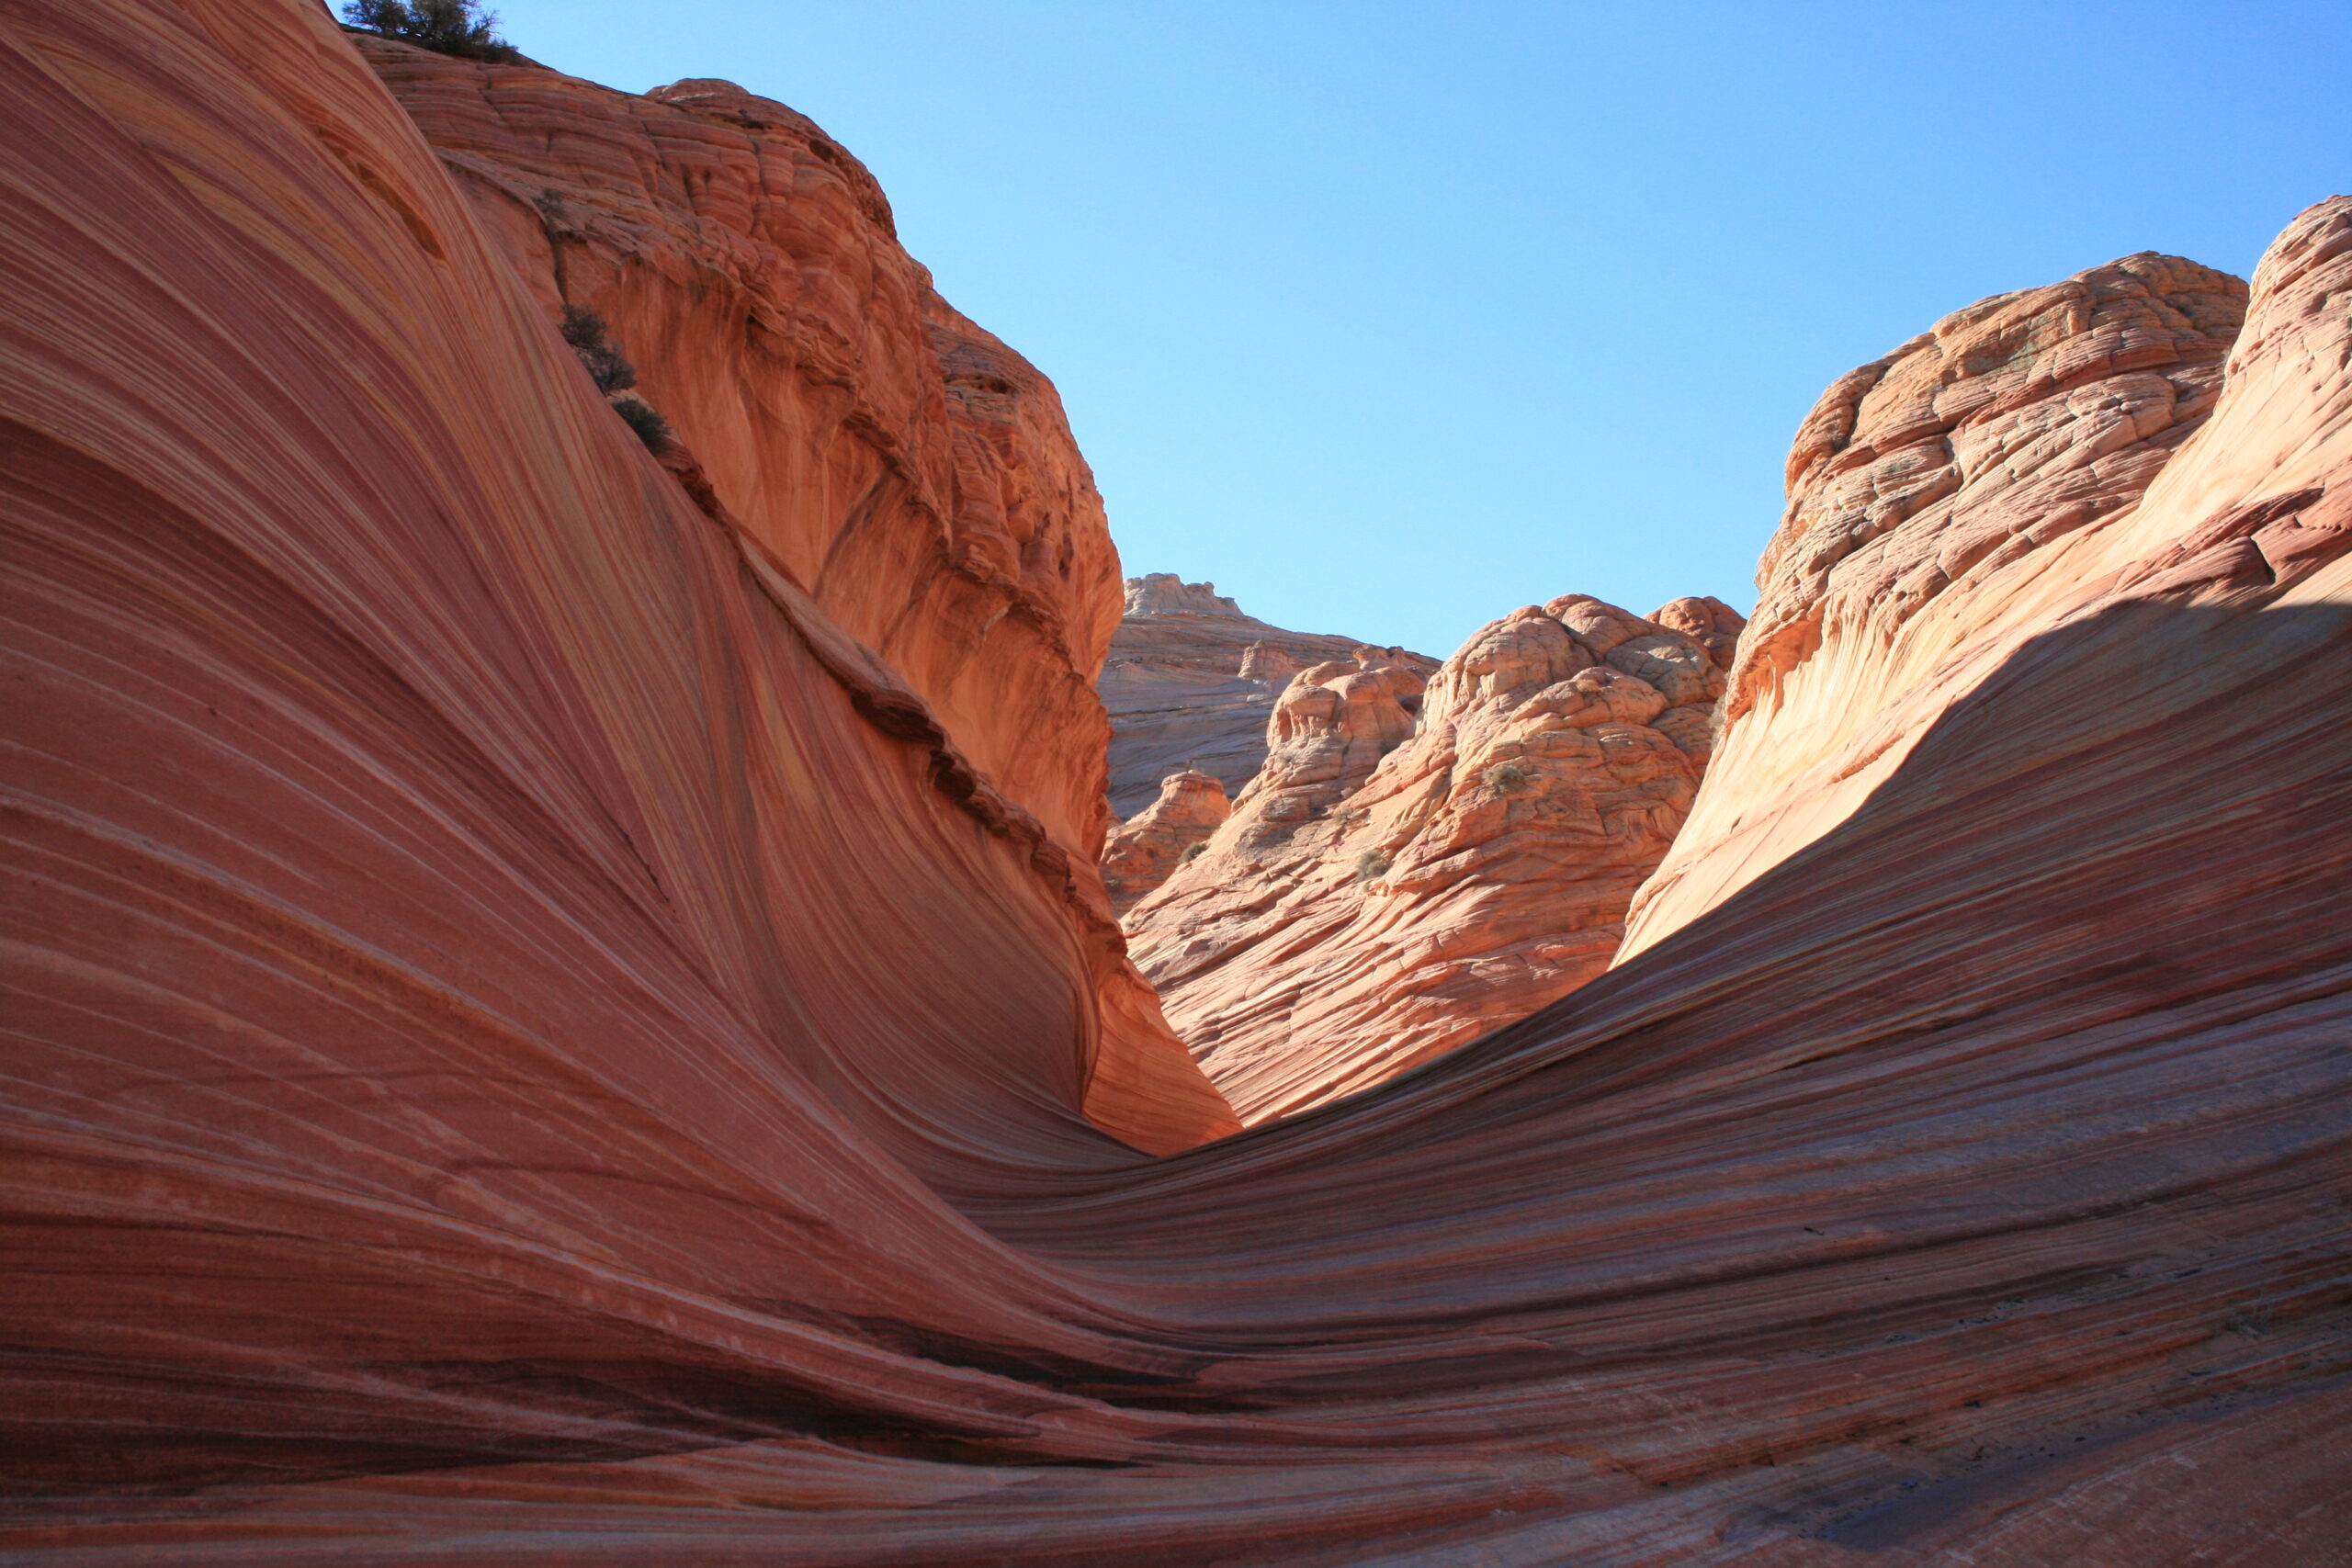 The Wave, a sandstone formation near the Utah-Arizona border.